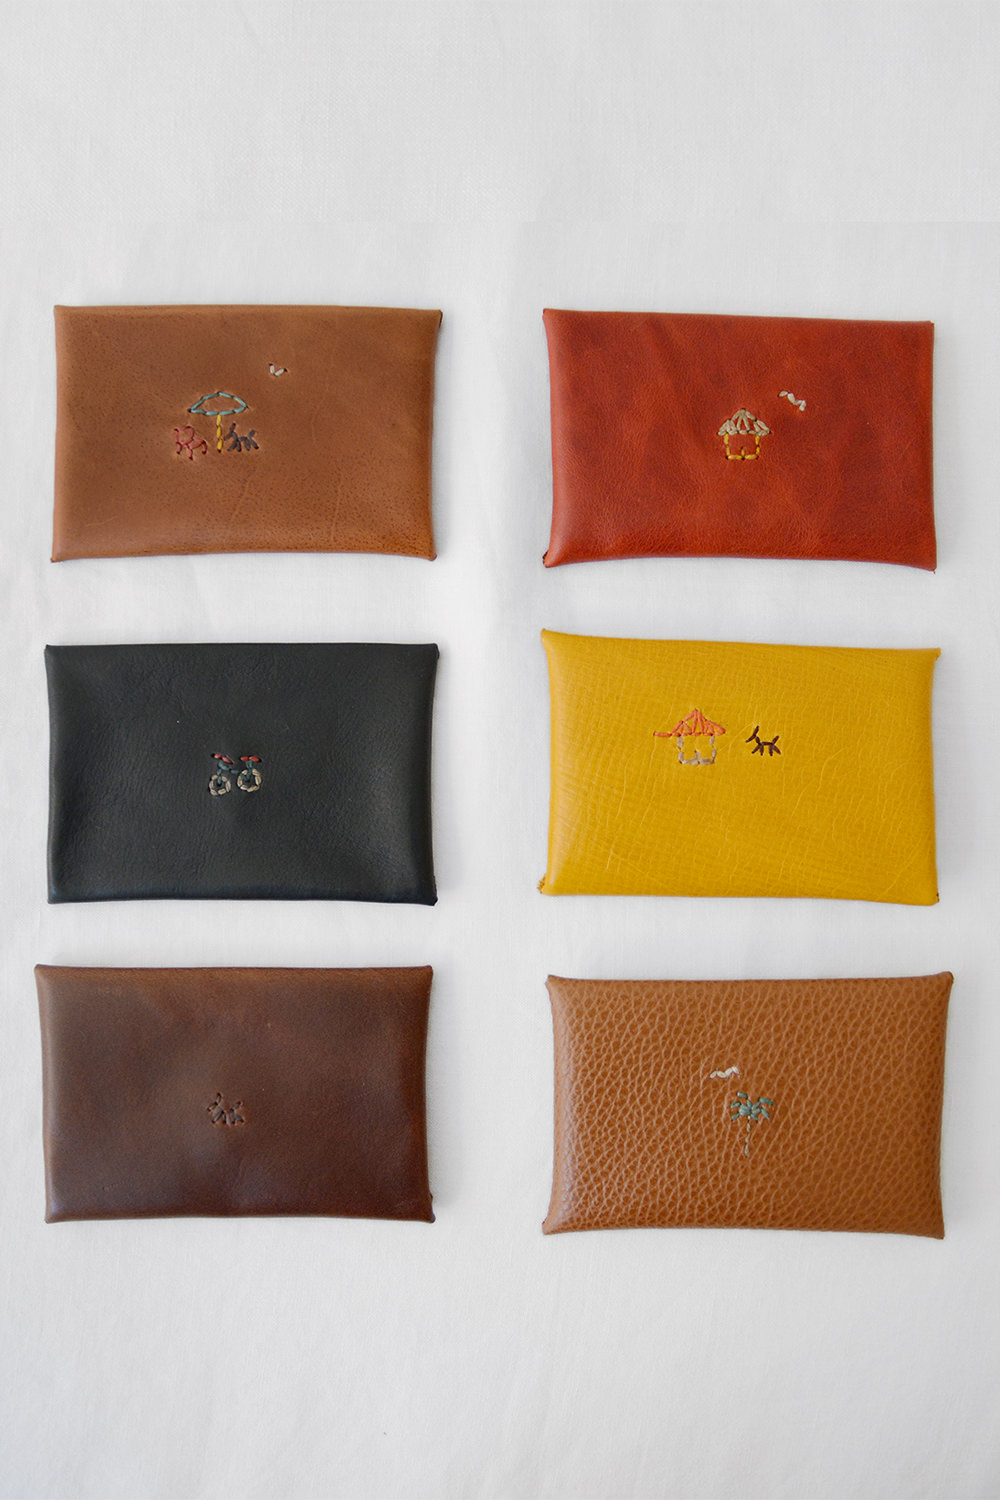 Henri、アンリ、leather goods、handcrafted leather、ハンドクラフト、made in Itary、ハンドメイド、手作り、handmade、カードケース、card case